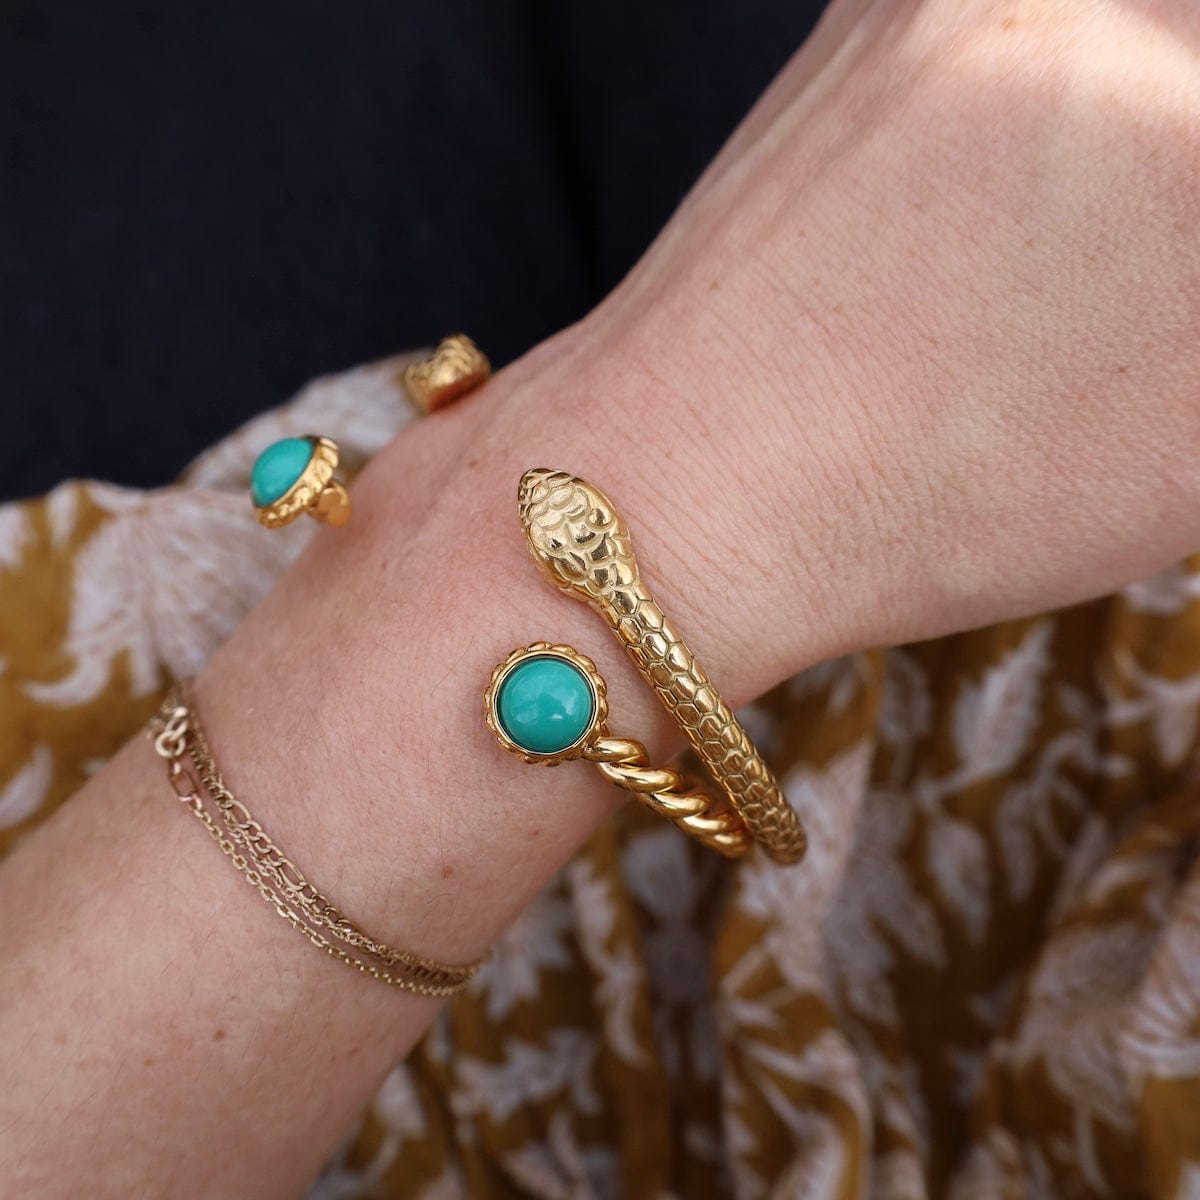 BRC-GPL HYGIA// The snake bracelet - 18k gold plated stain